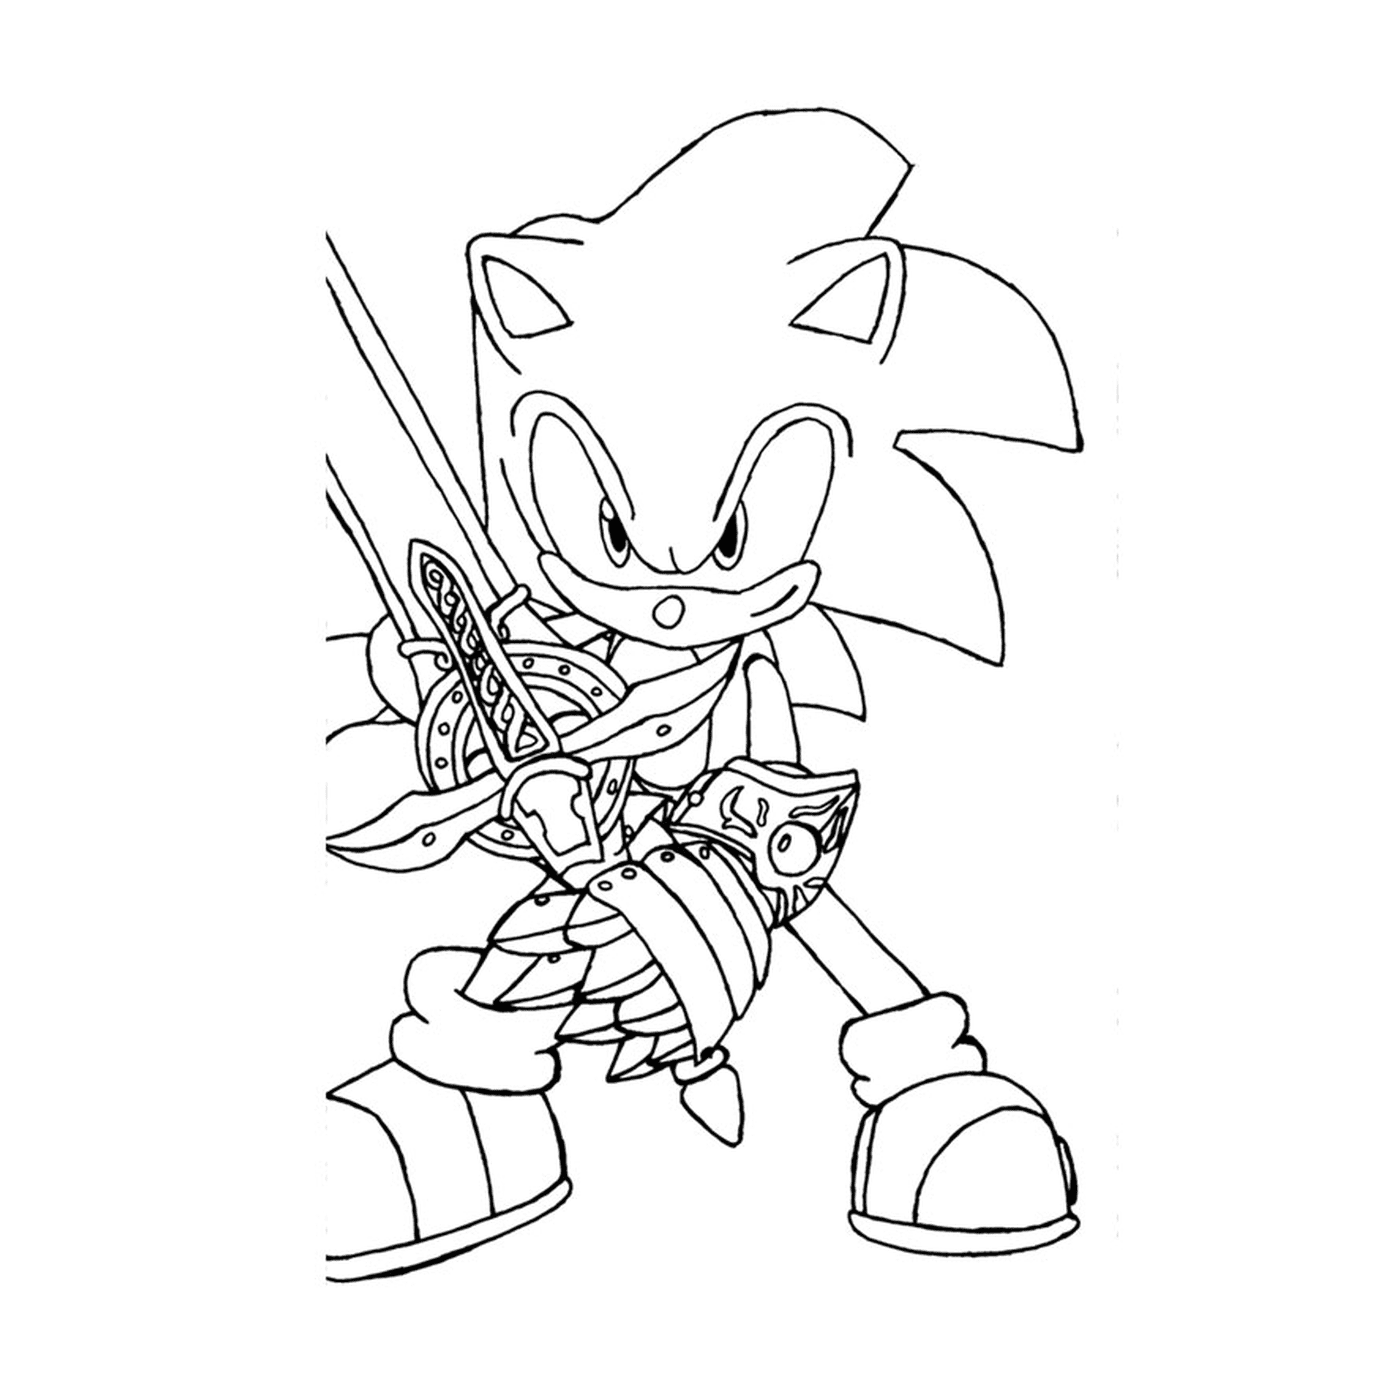  Sonic in sharp motion 